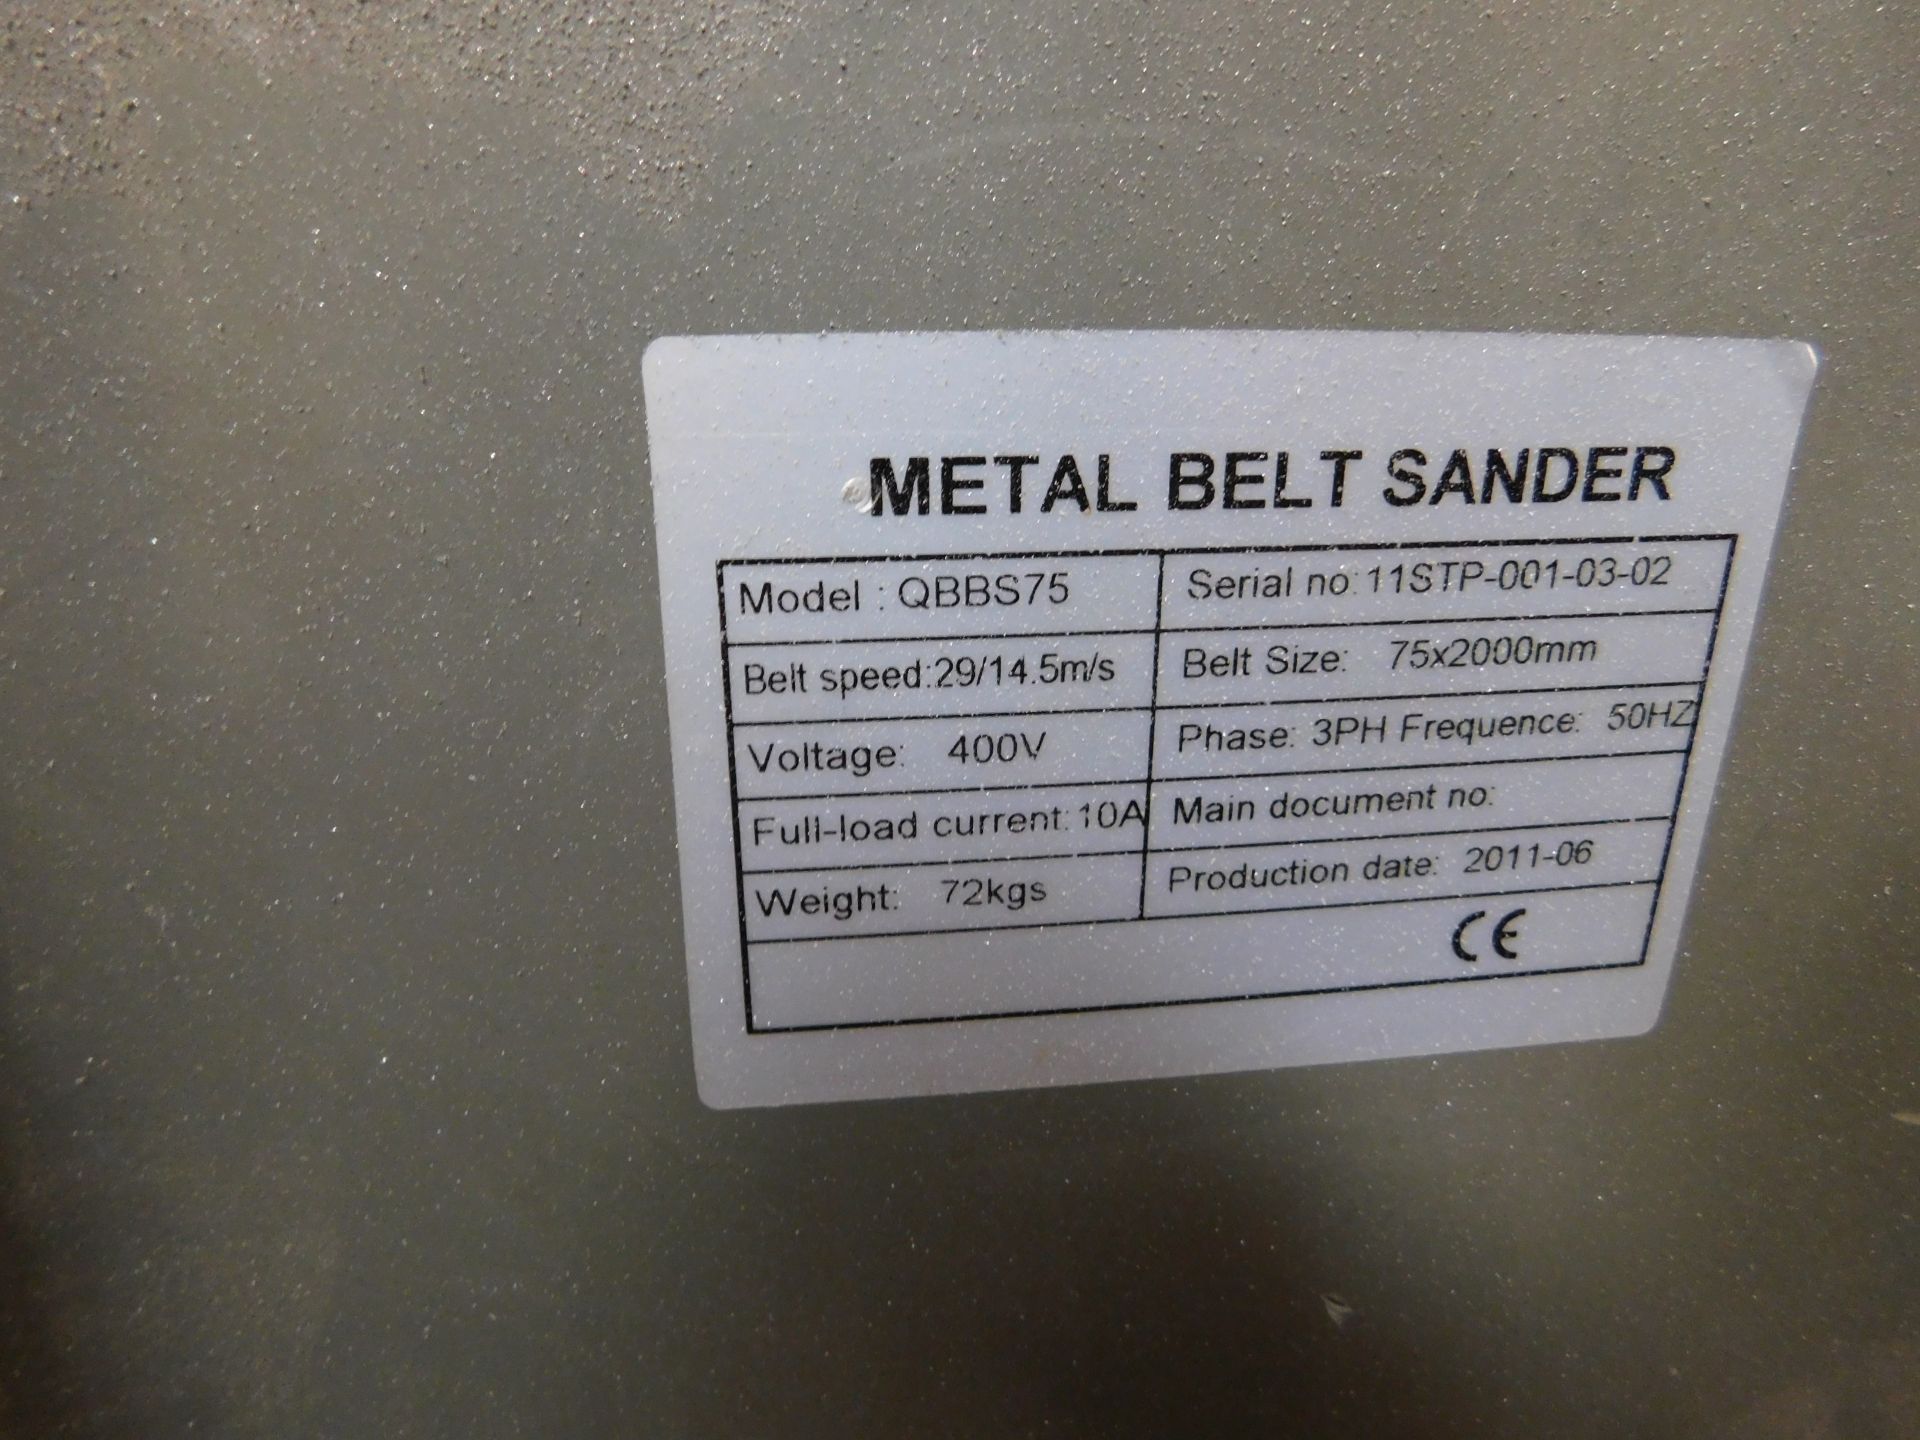 Surtech Model QBBS75 Metal Belt Sander, Serial Number 11STP-001-03-02 (Location: Kettering - See - Image 3 of 3